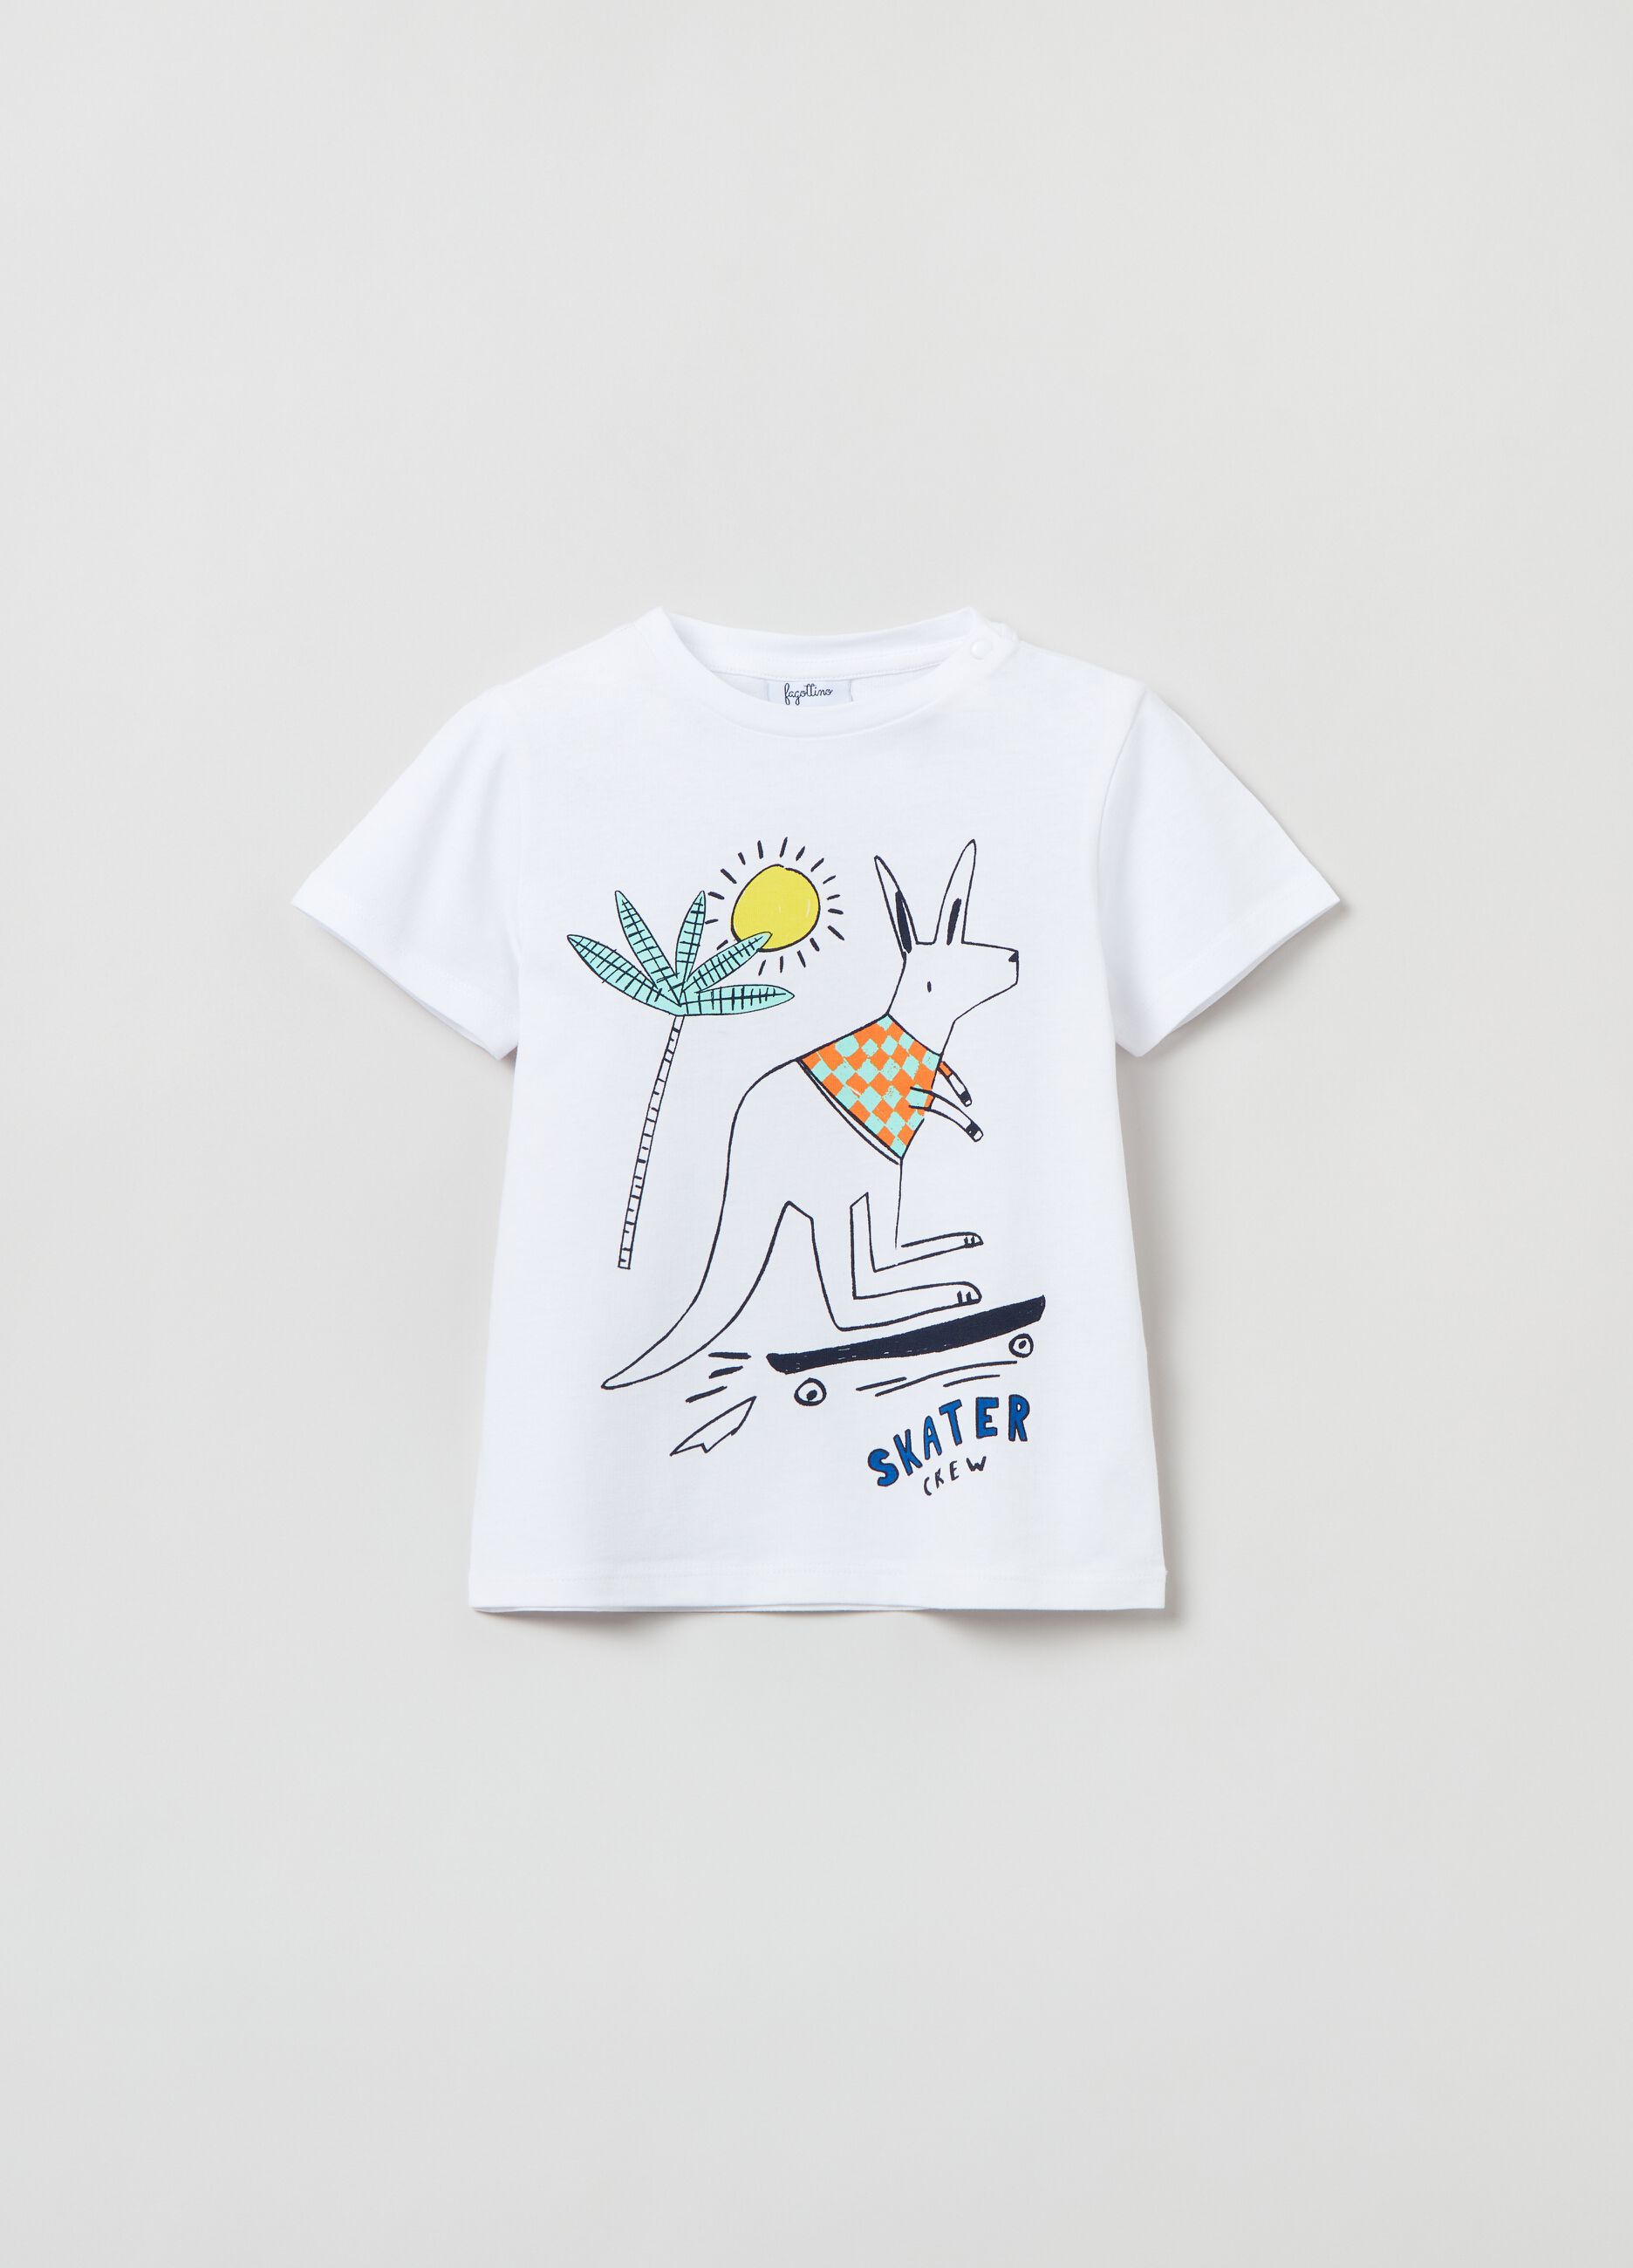 Cotton T-shirt with kangaroo skater print